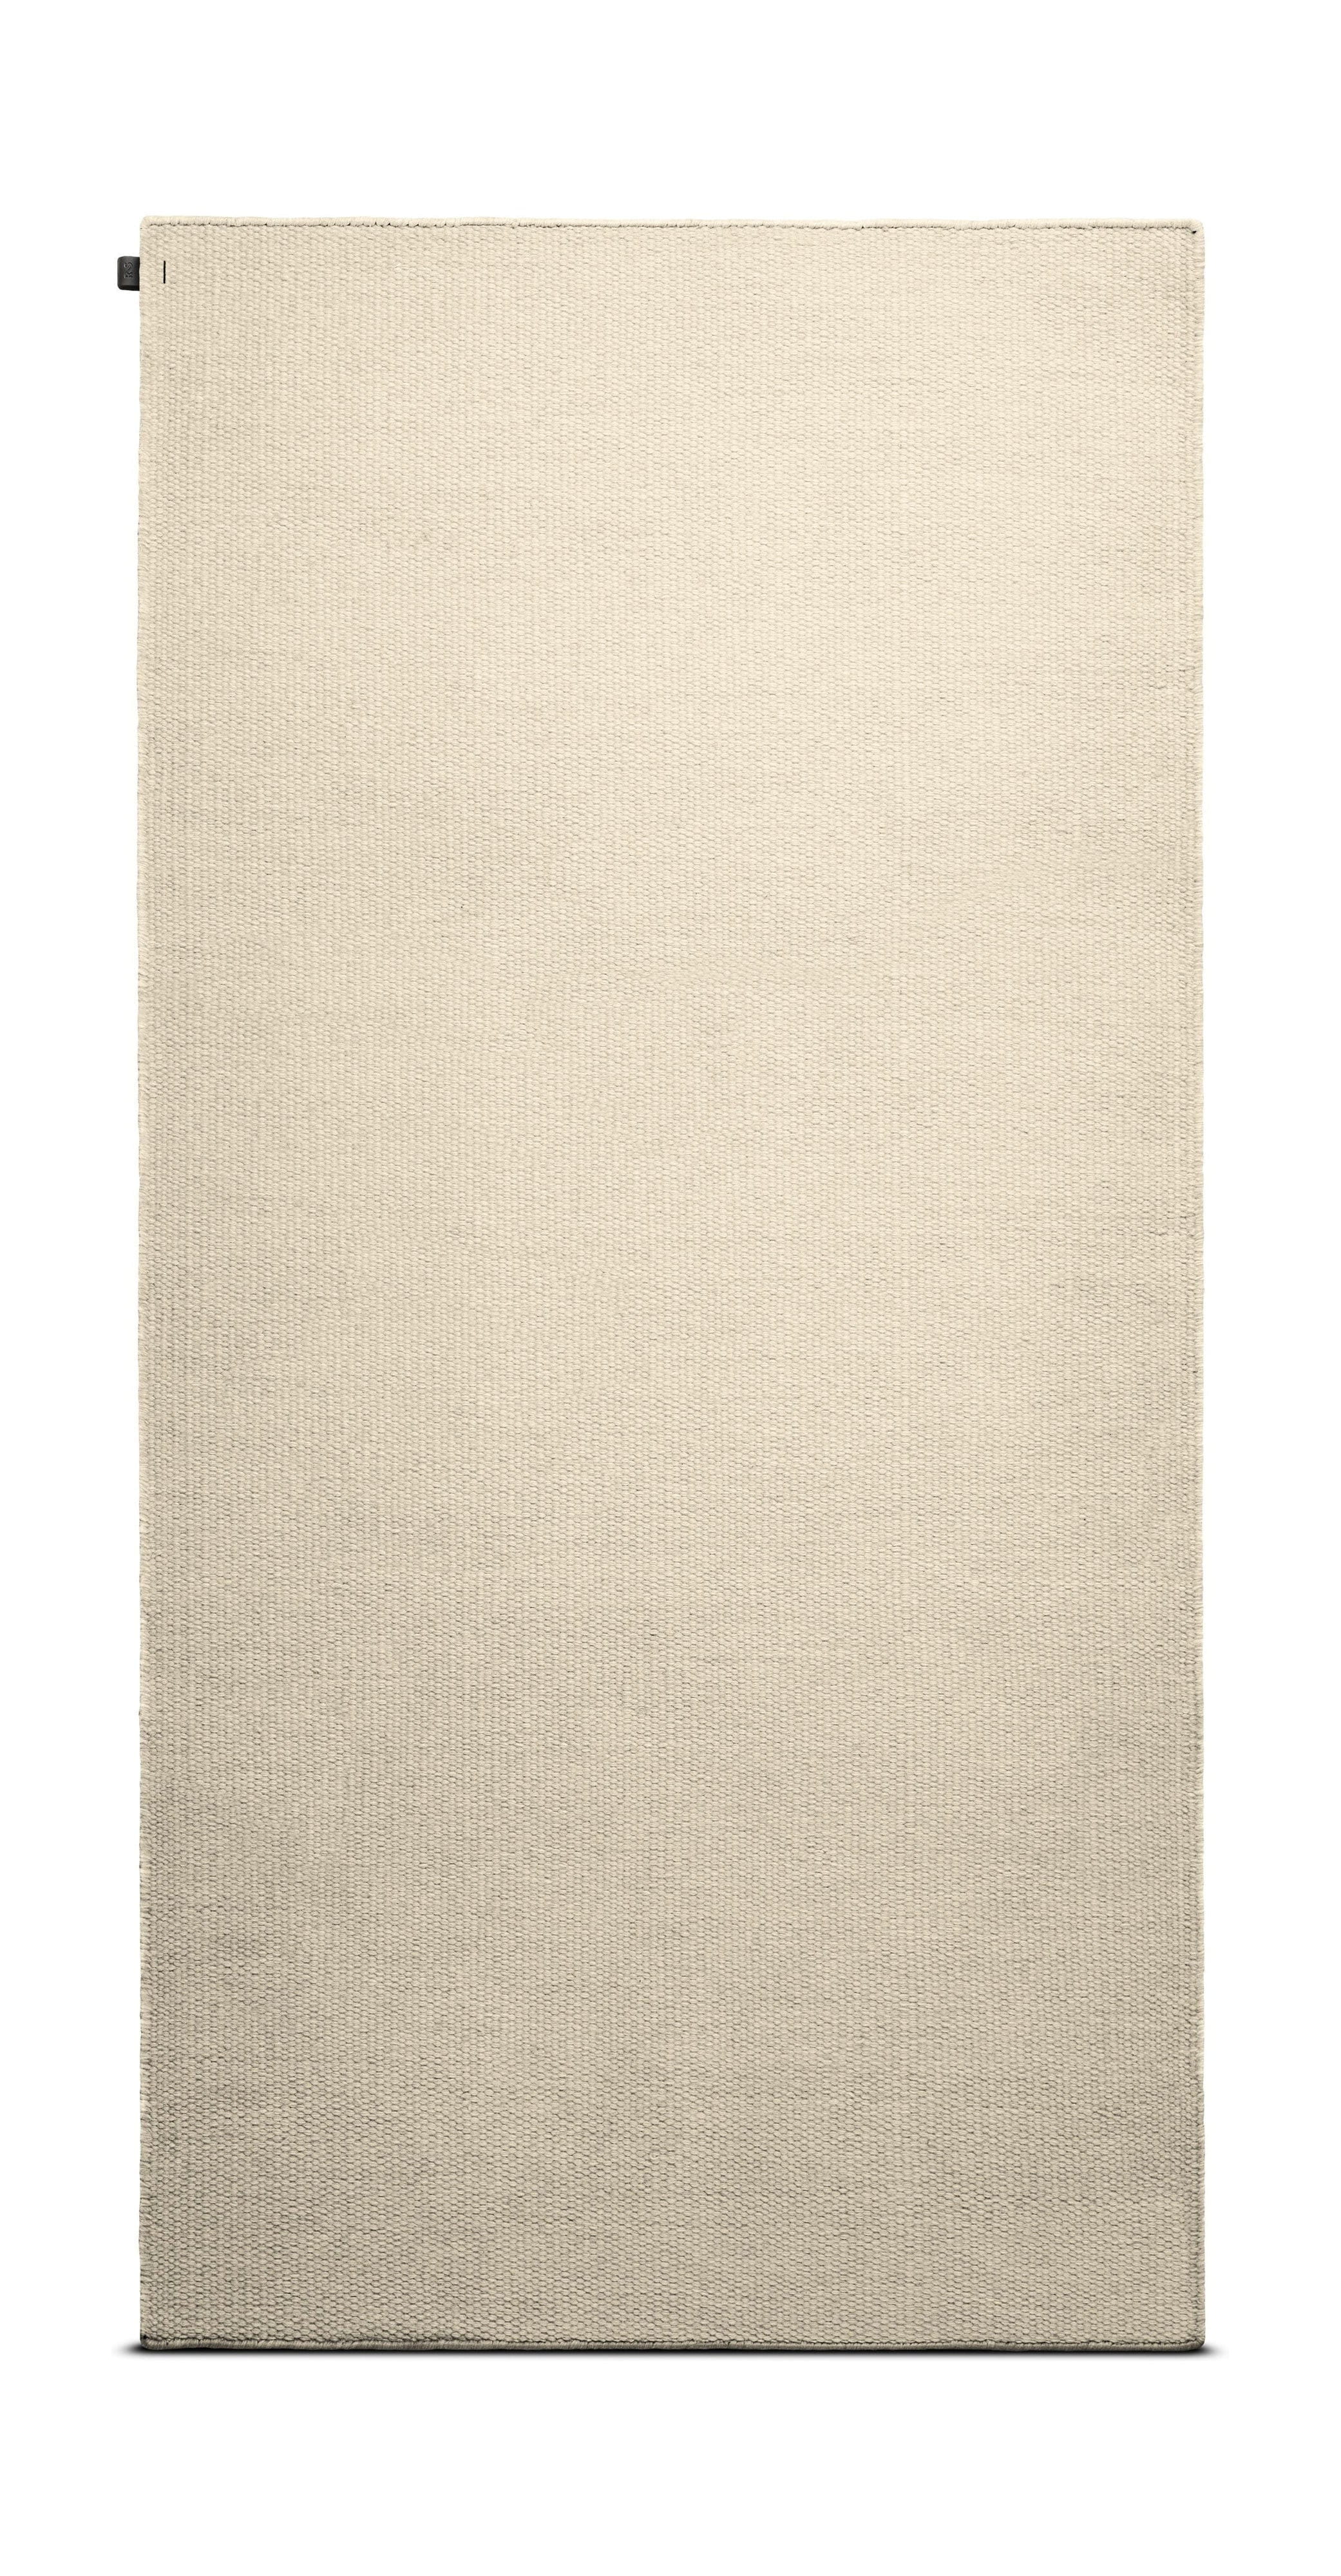 Rug Solid Huisdier tapijt 200 x 300 cm, latte